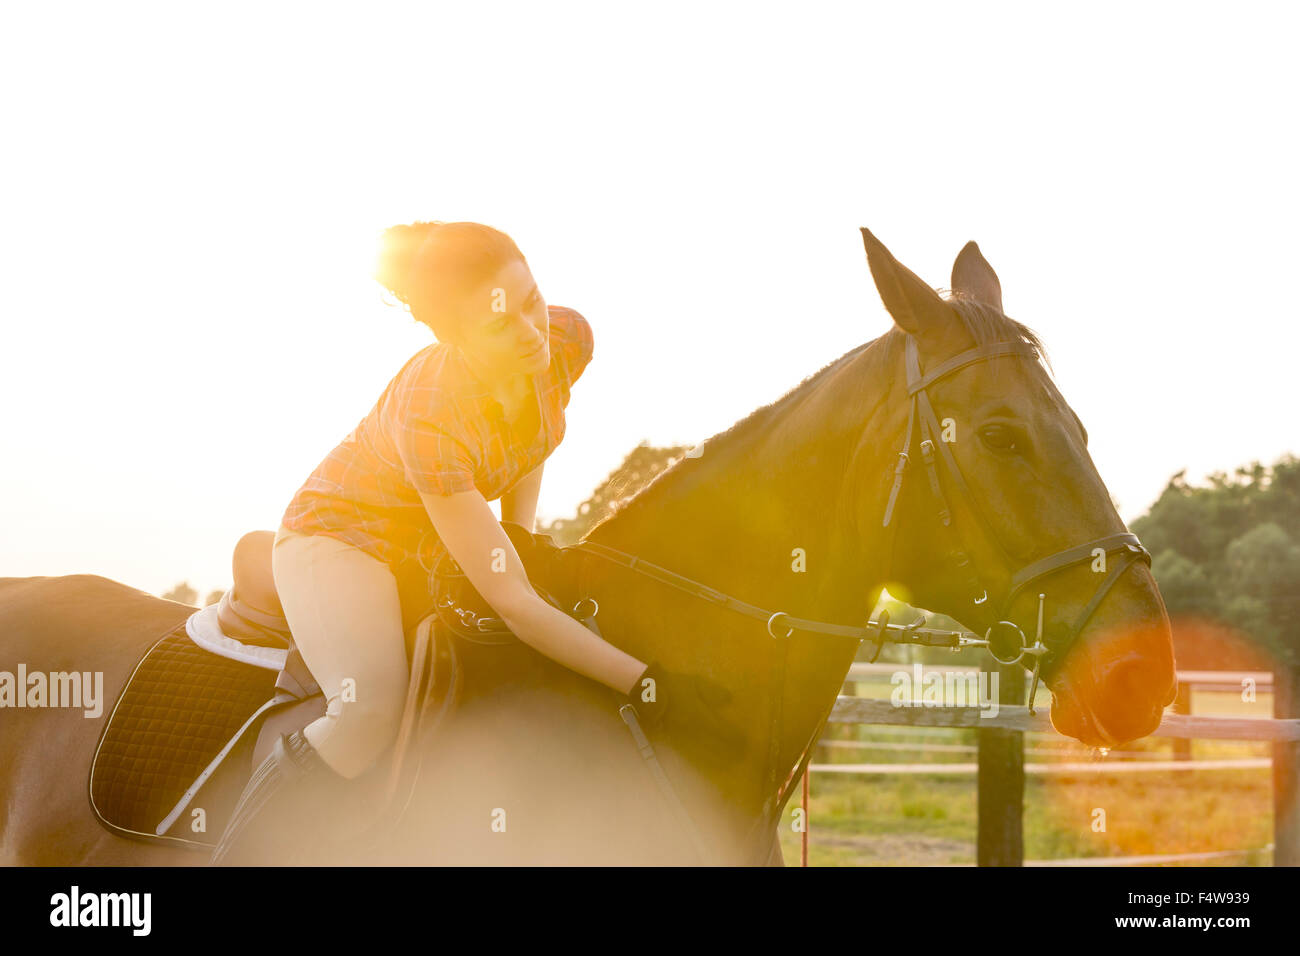 Woman on horseback petting horse in rural pasture Stock Photo